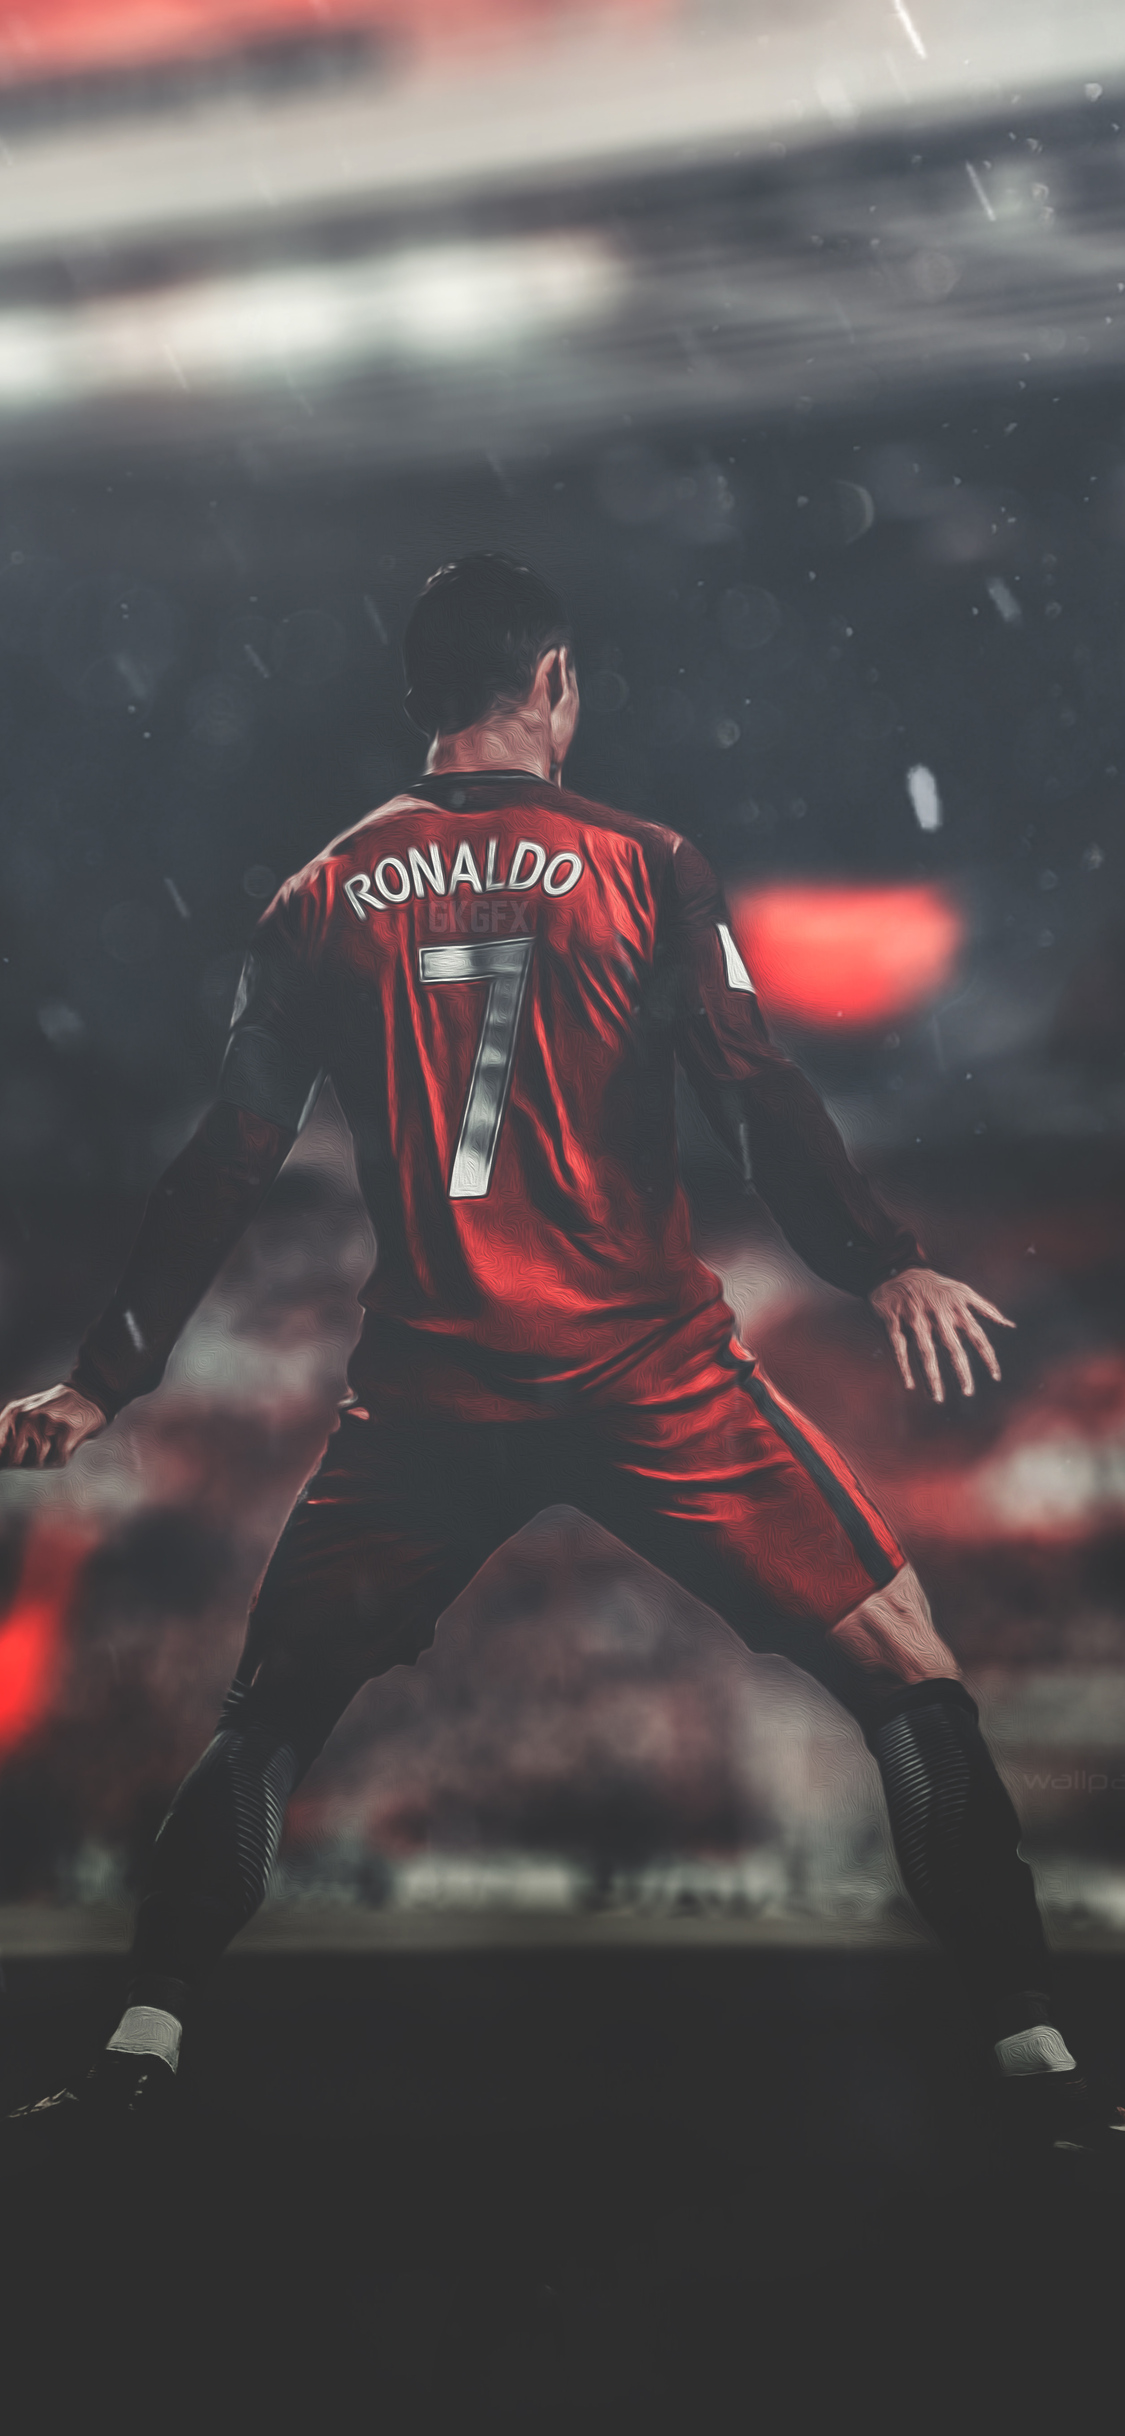 Ronaldo Wallpaper Iphone X - HD Wallpaper 